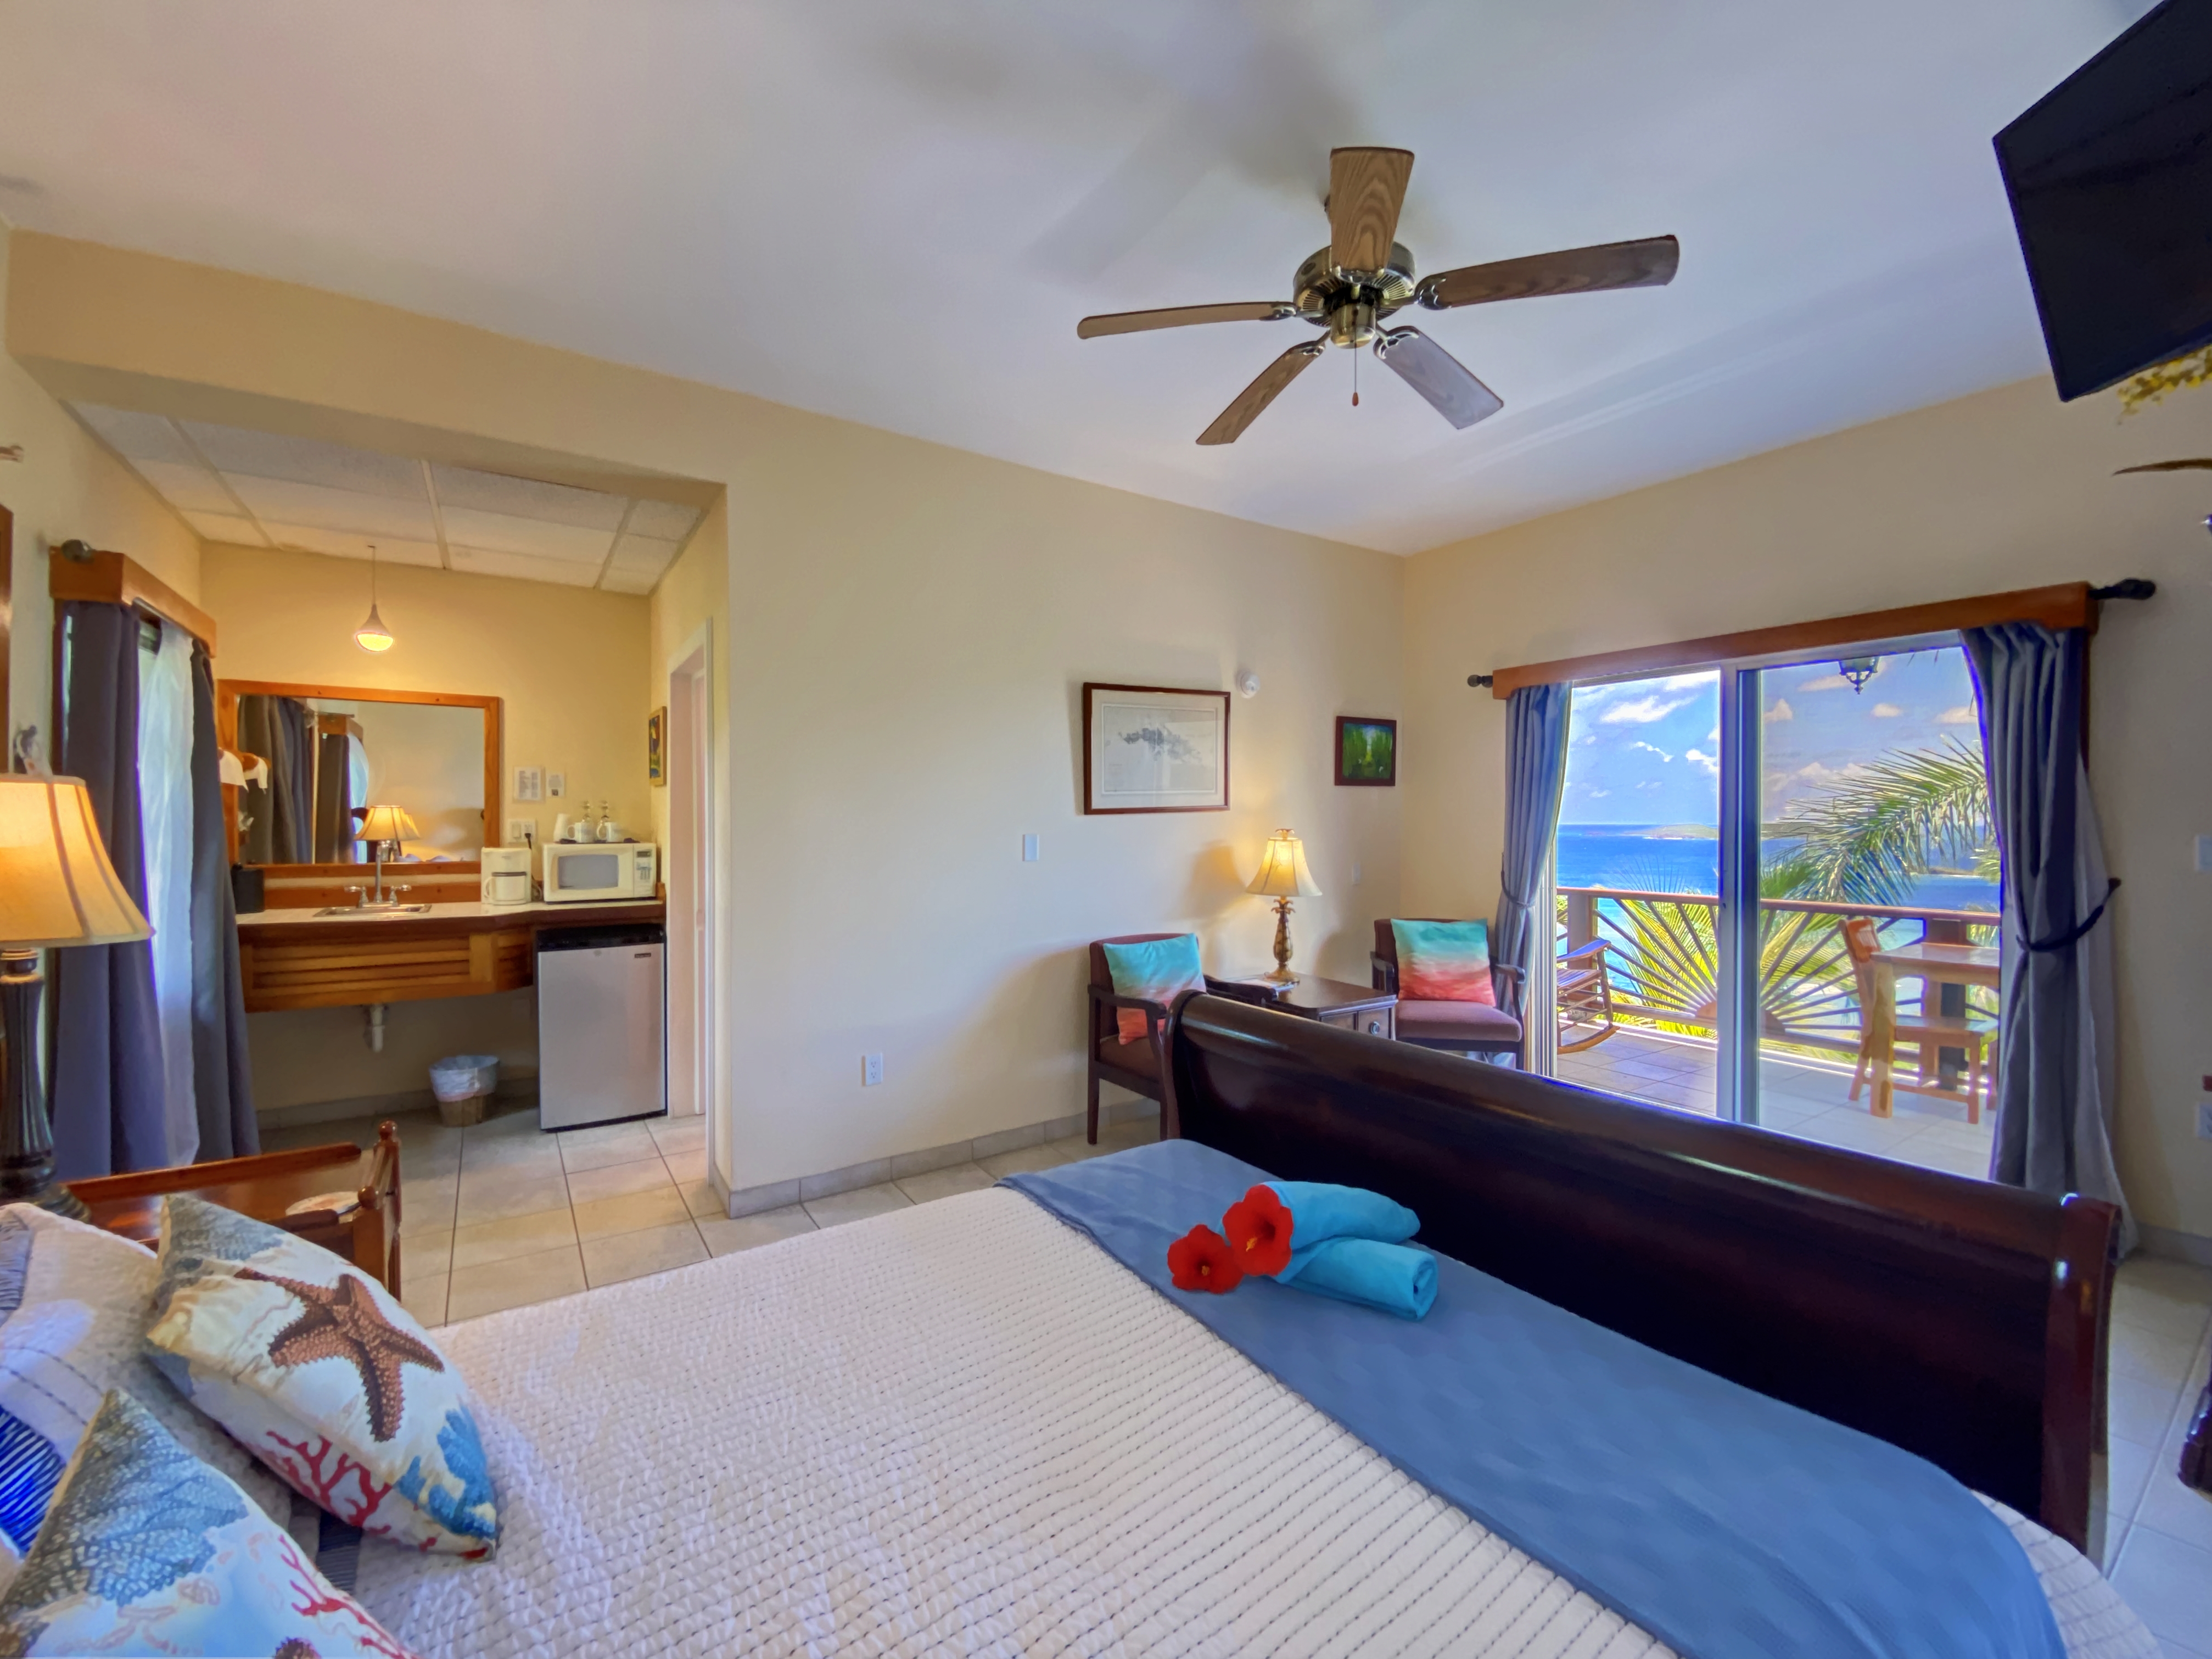 Best St. John hotels in Virgin Islands with balcony view
